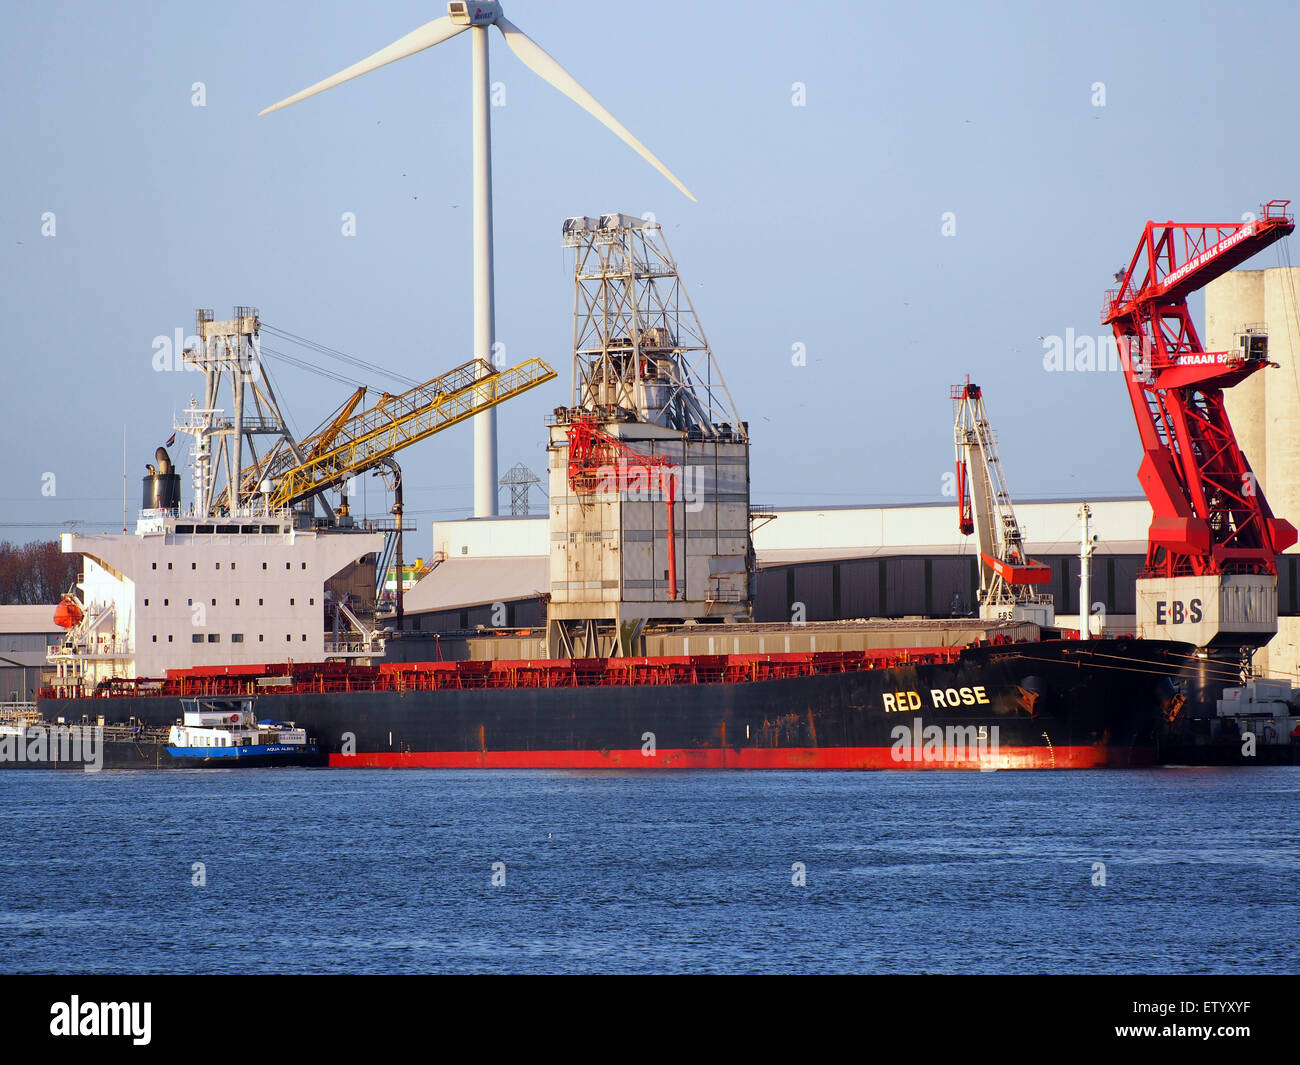 Red Rose - IMO 9267613 - Callsign HOSP, Beneluxhaven, Port of Rotterdam, pic2 Stock Photo